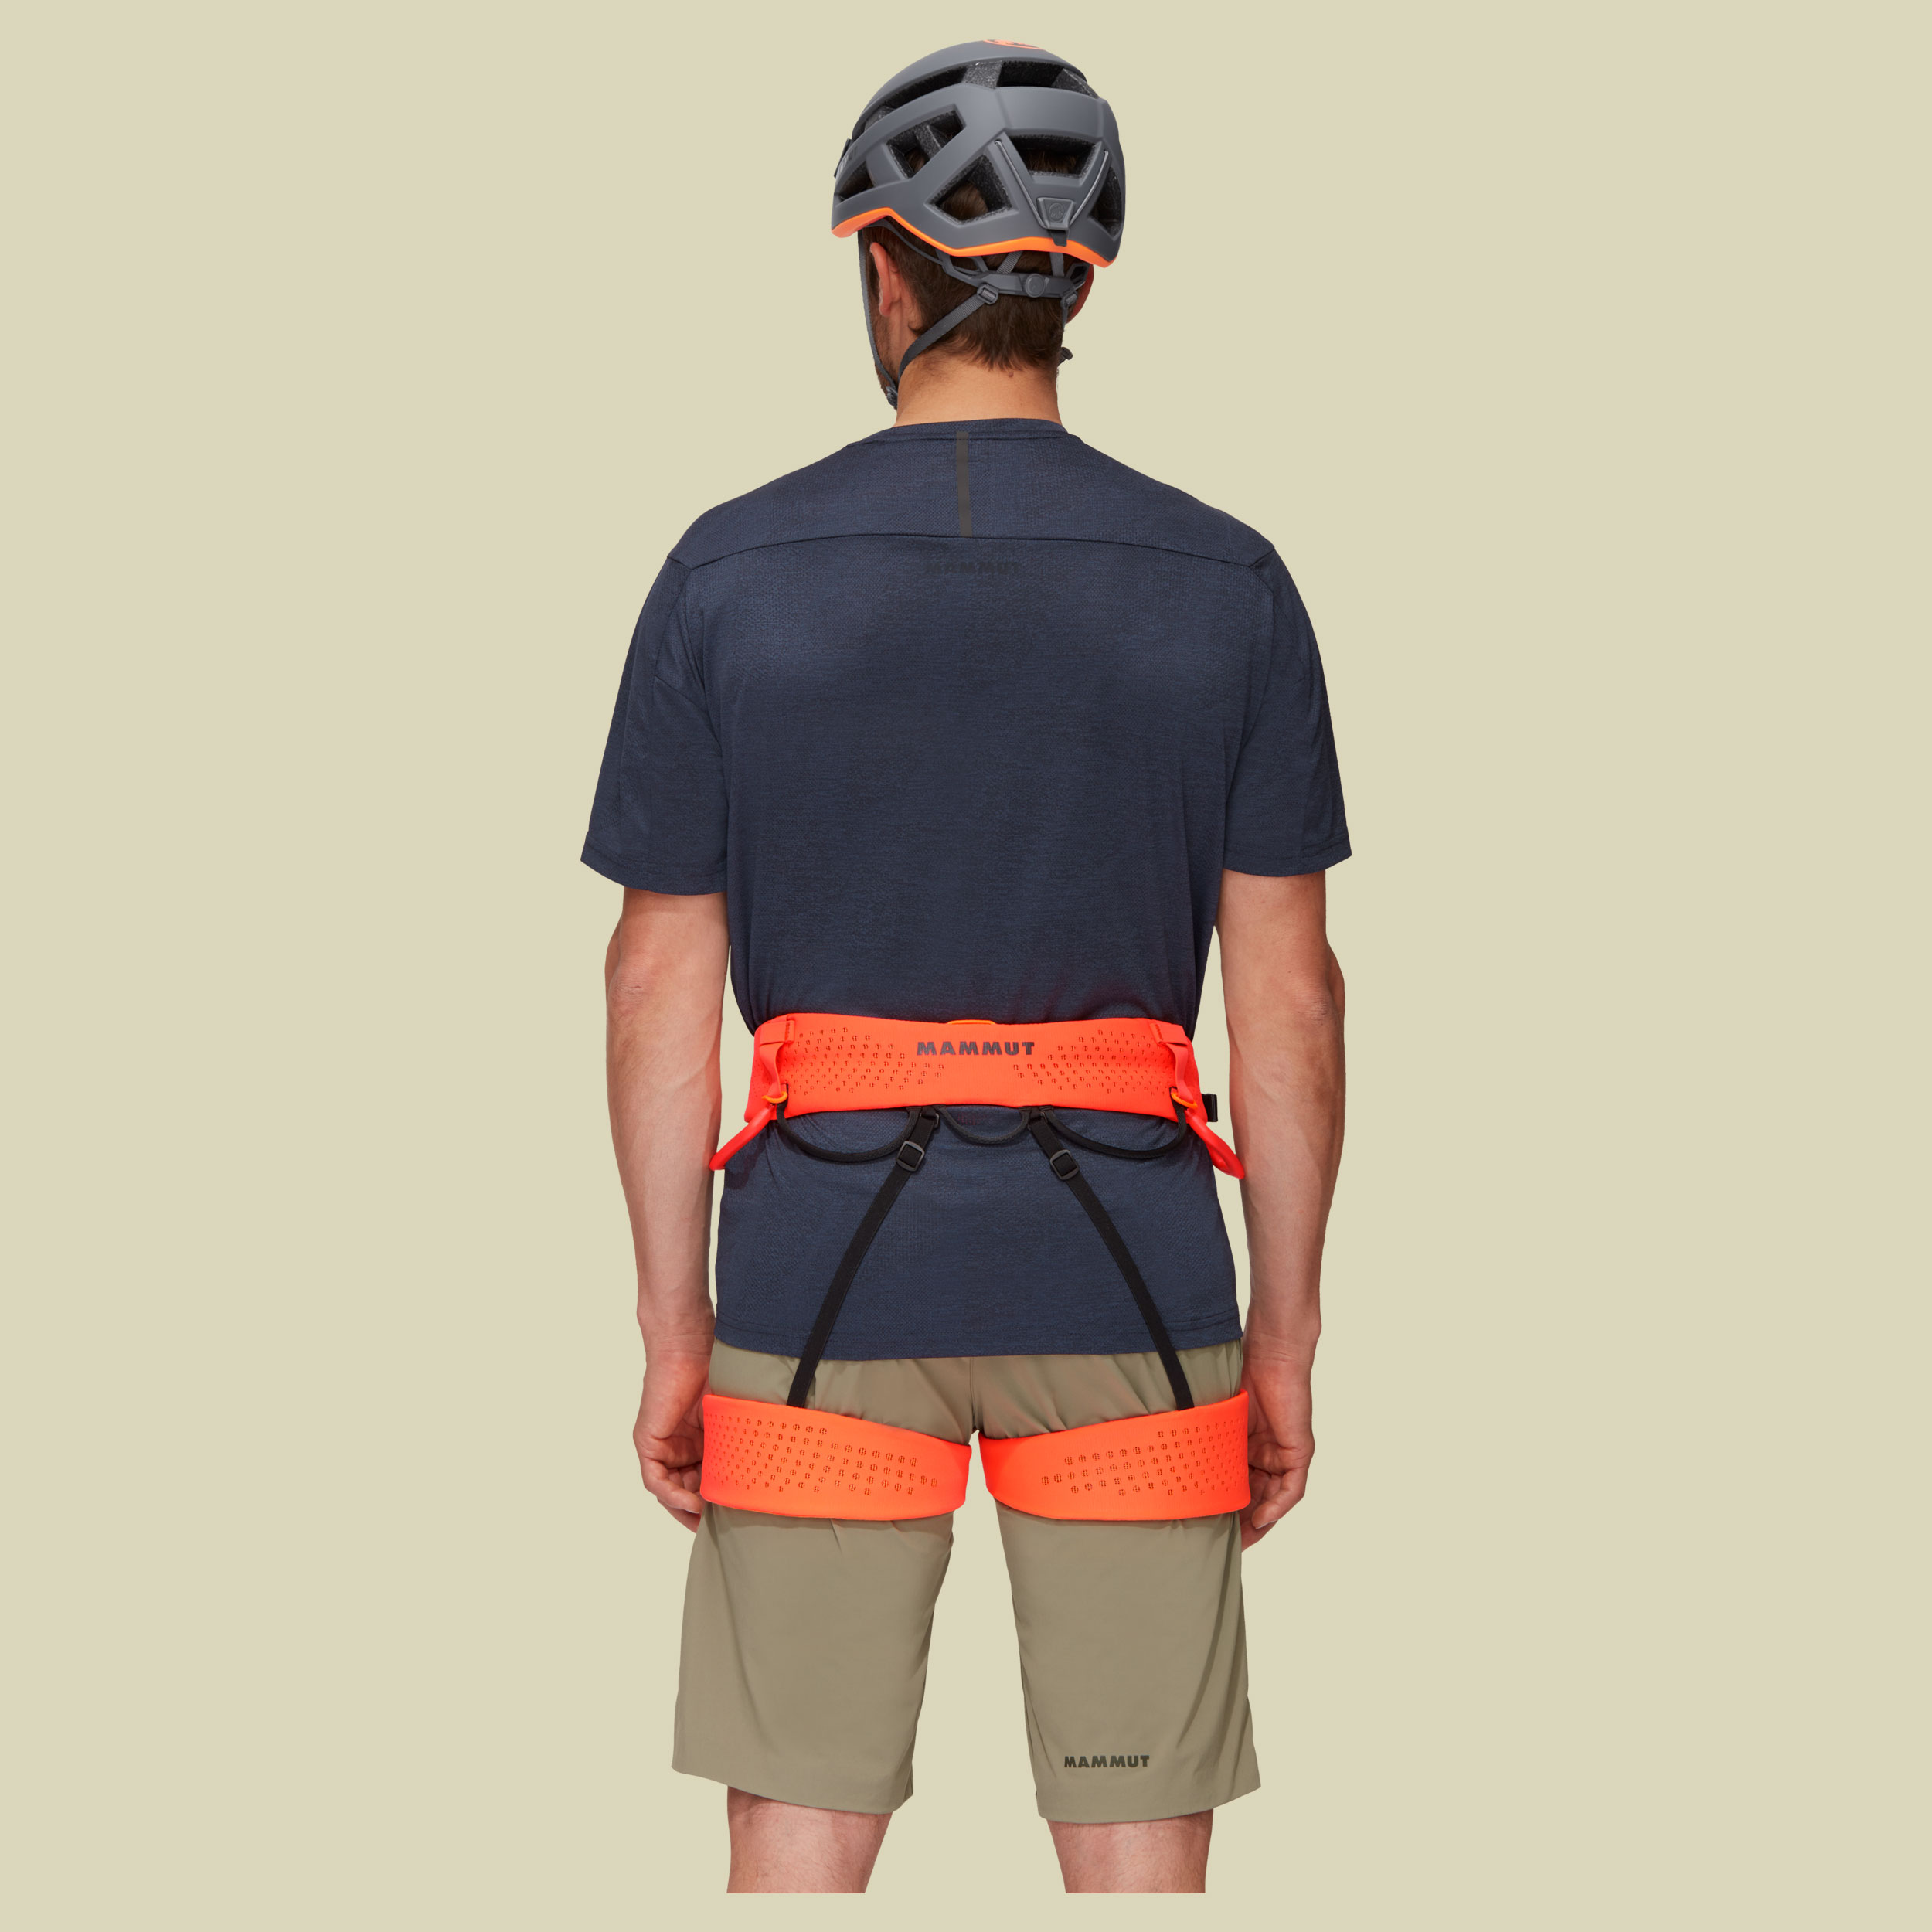 Sender Harness Länge S Farbe safety orange